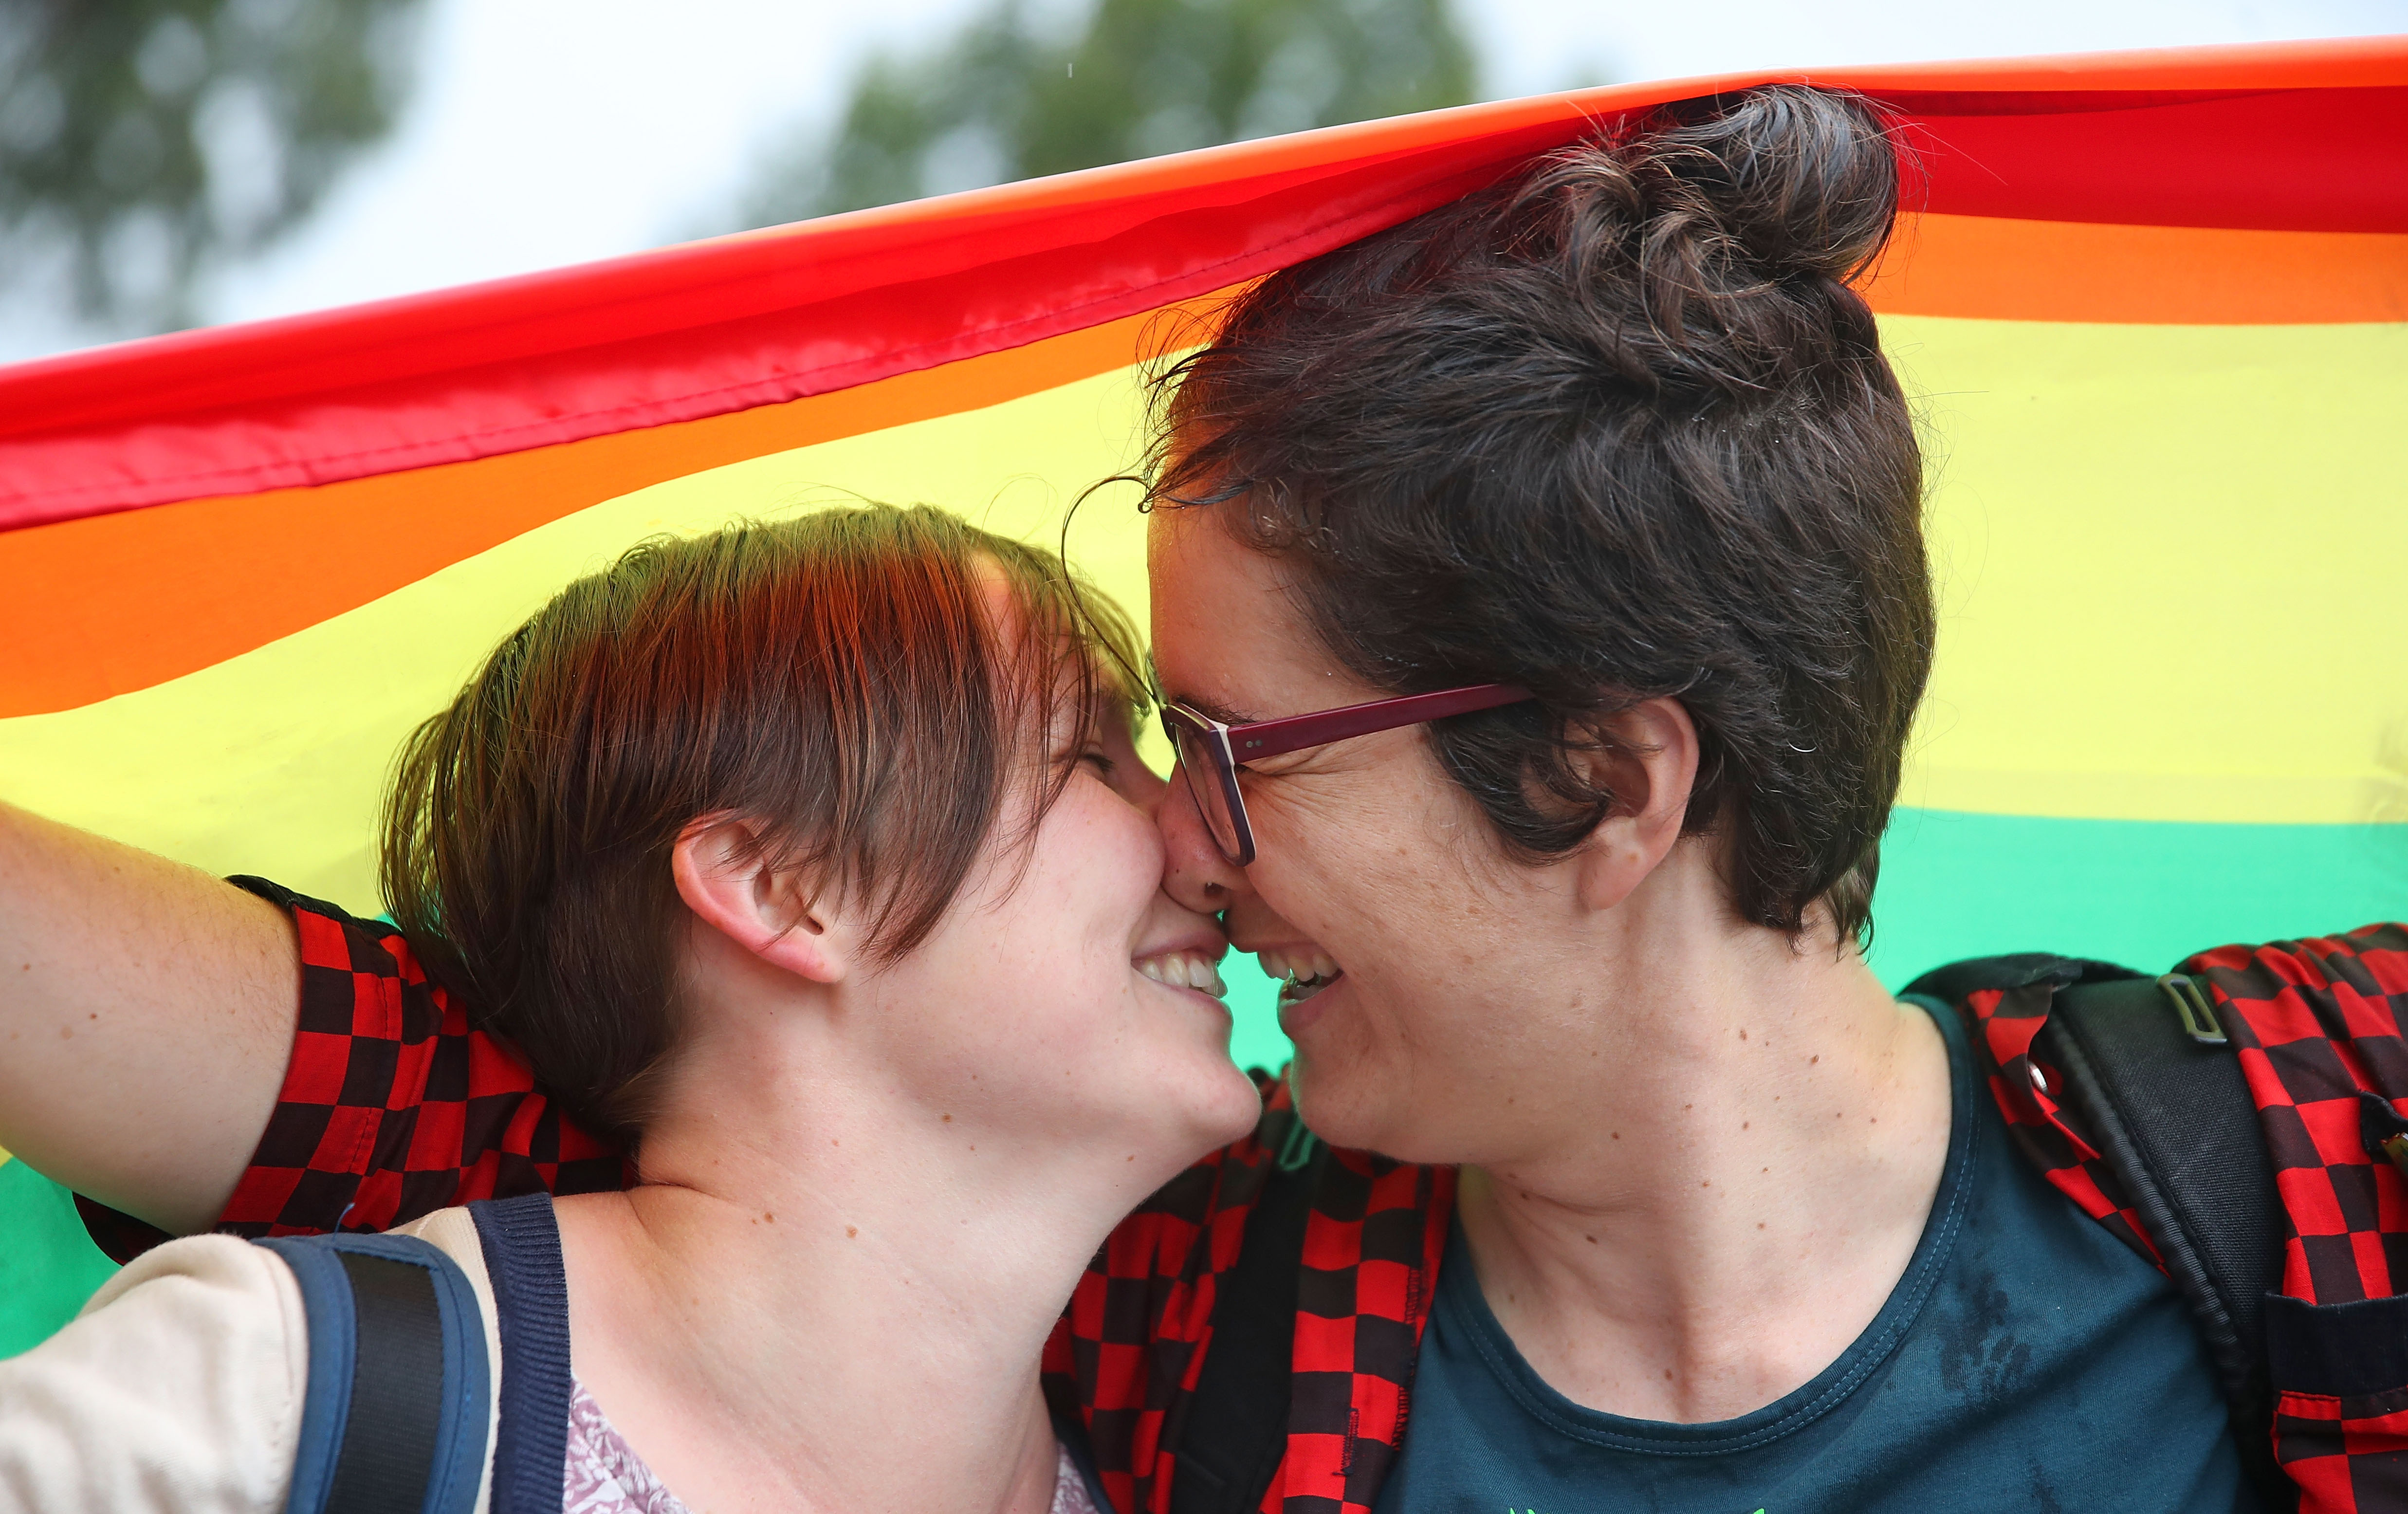 Australian kiss. Австралия ЛГБТ. Австралийский поцелуй фото. Поцелуй по австралийски. Австралии поцелуй.